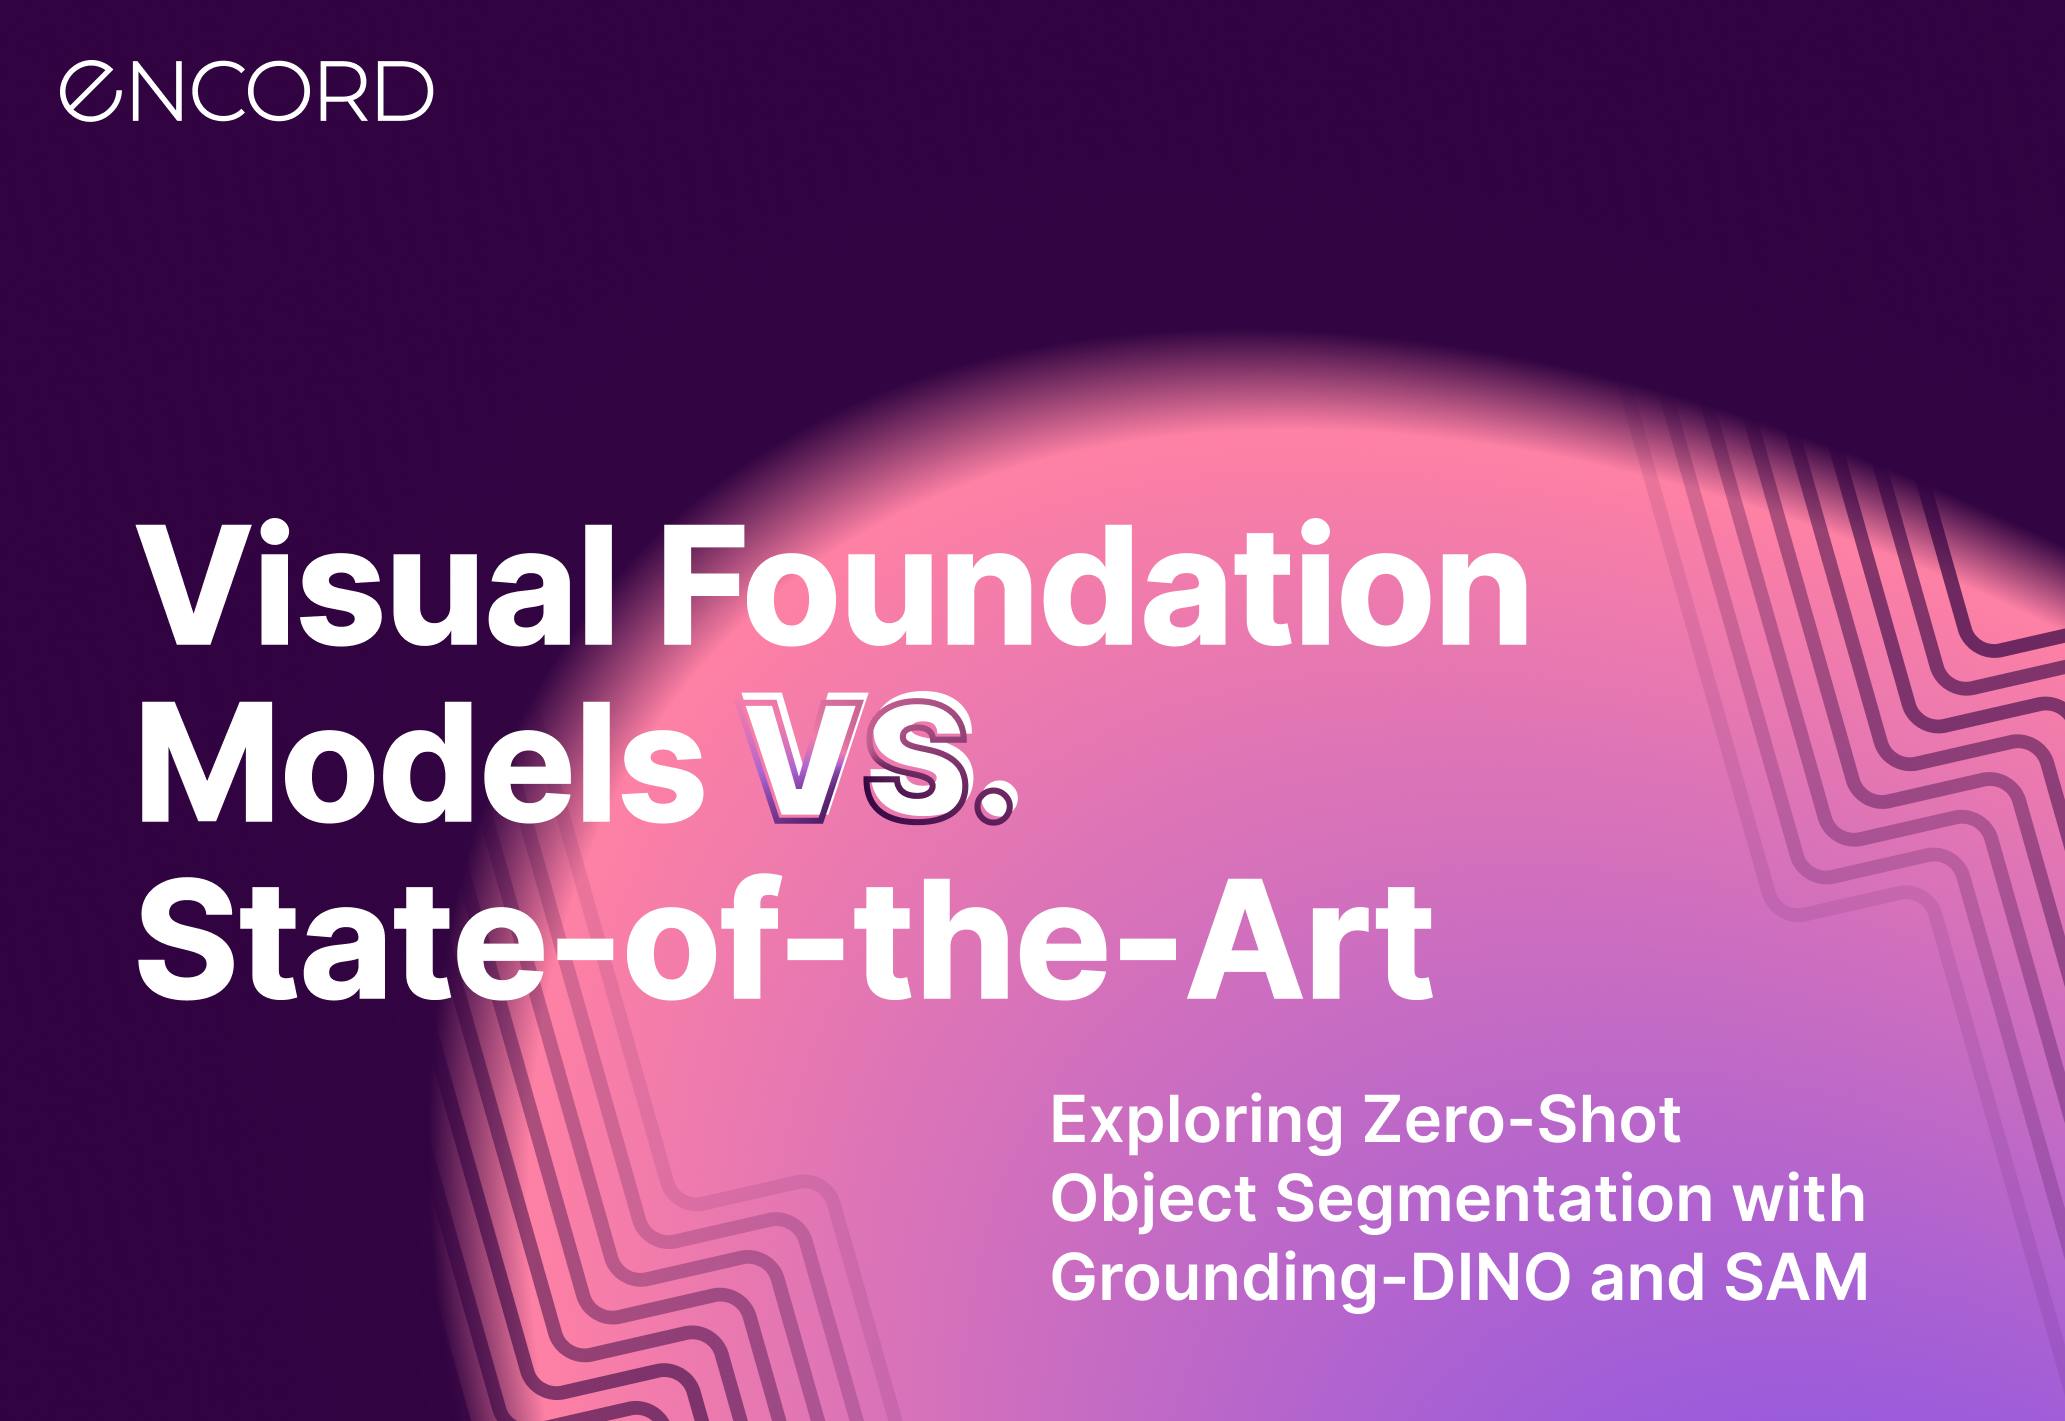 How do Visual Foundation Models (VFMs) compare with SOTA?